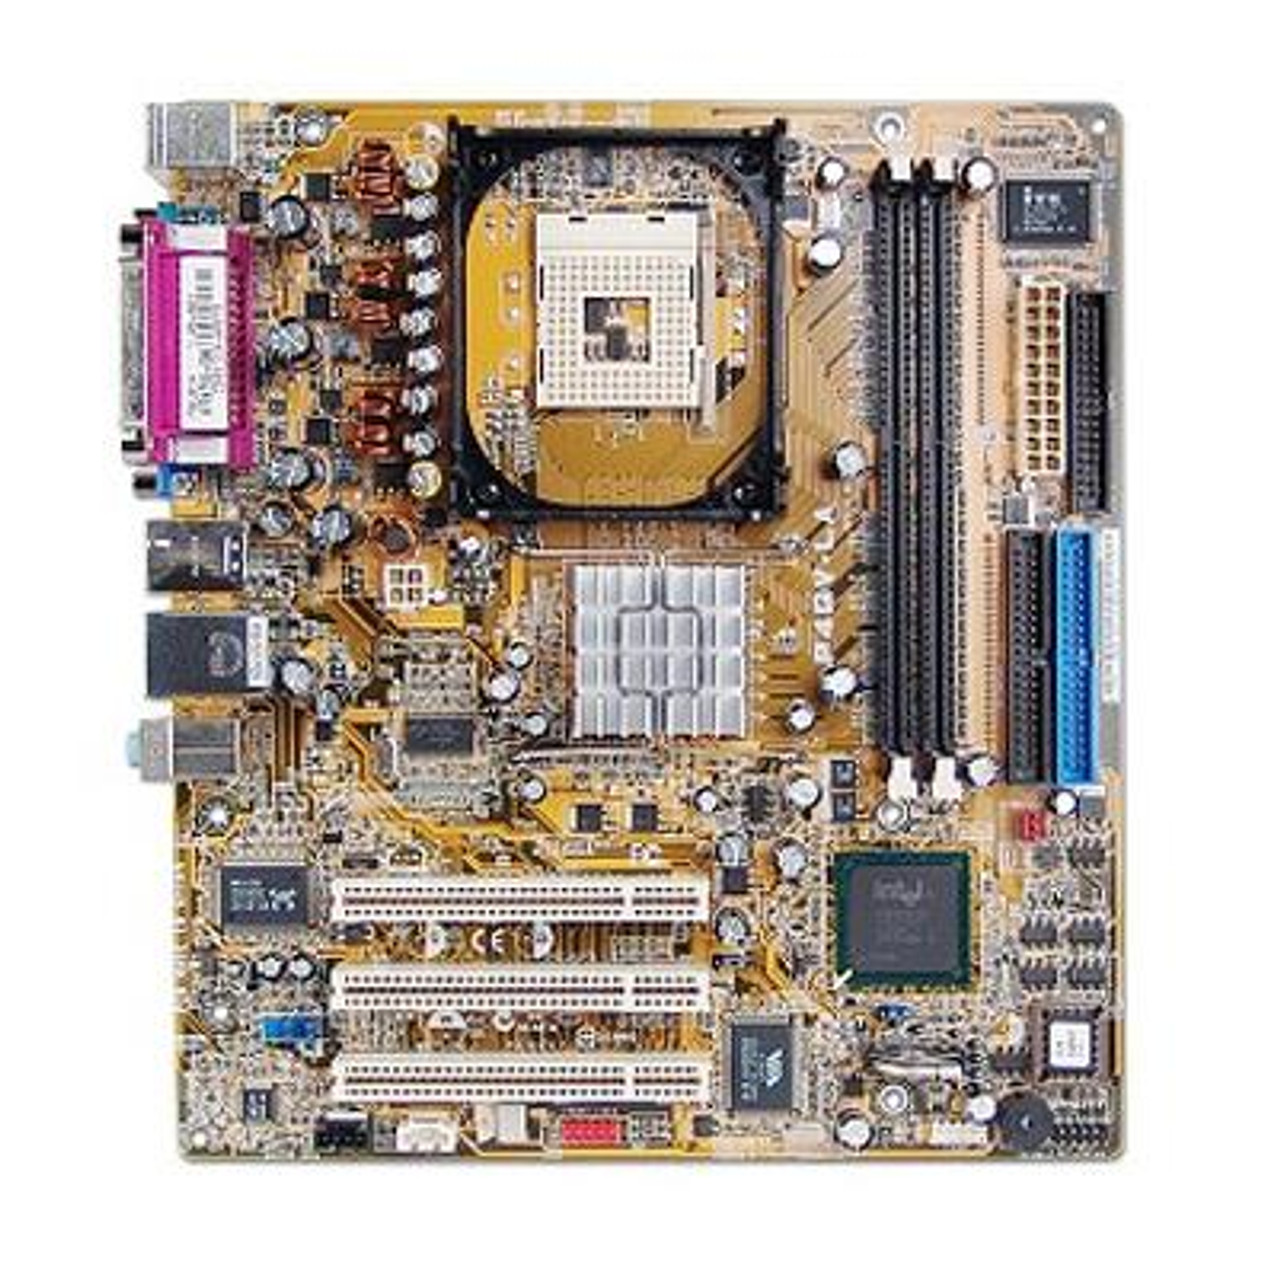 P4GV-LA-1.05-A01 HP P4GV-LA Socket 478 Intel 845GV/ICH4 Chipset micro-ATX System Board (Motherboard) (Refurbished)